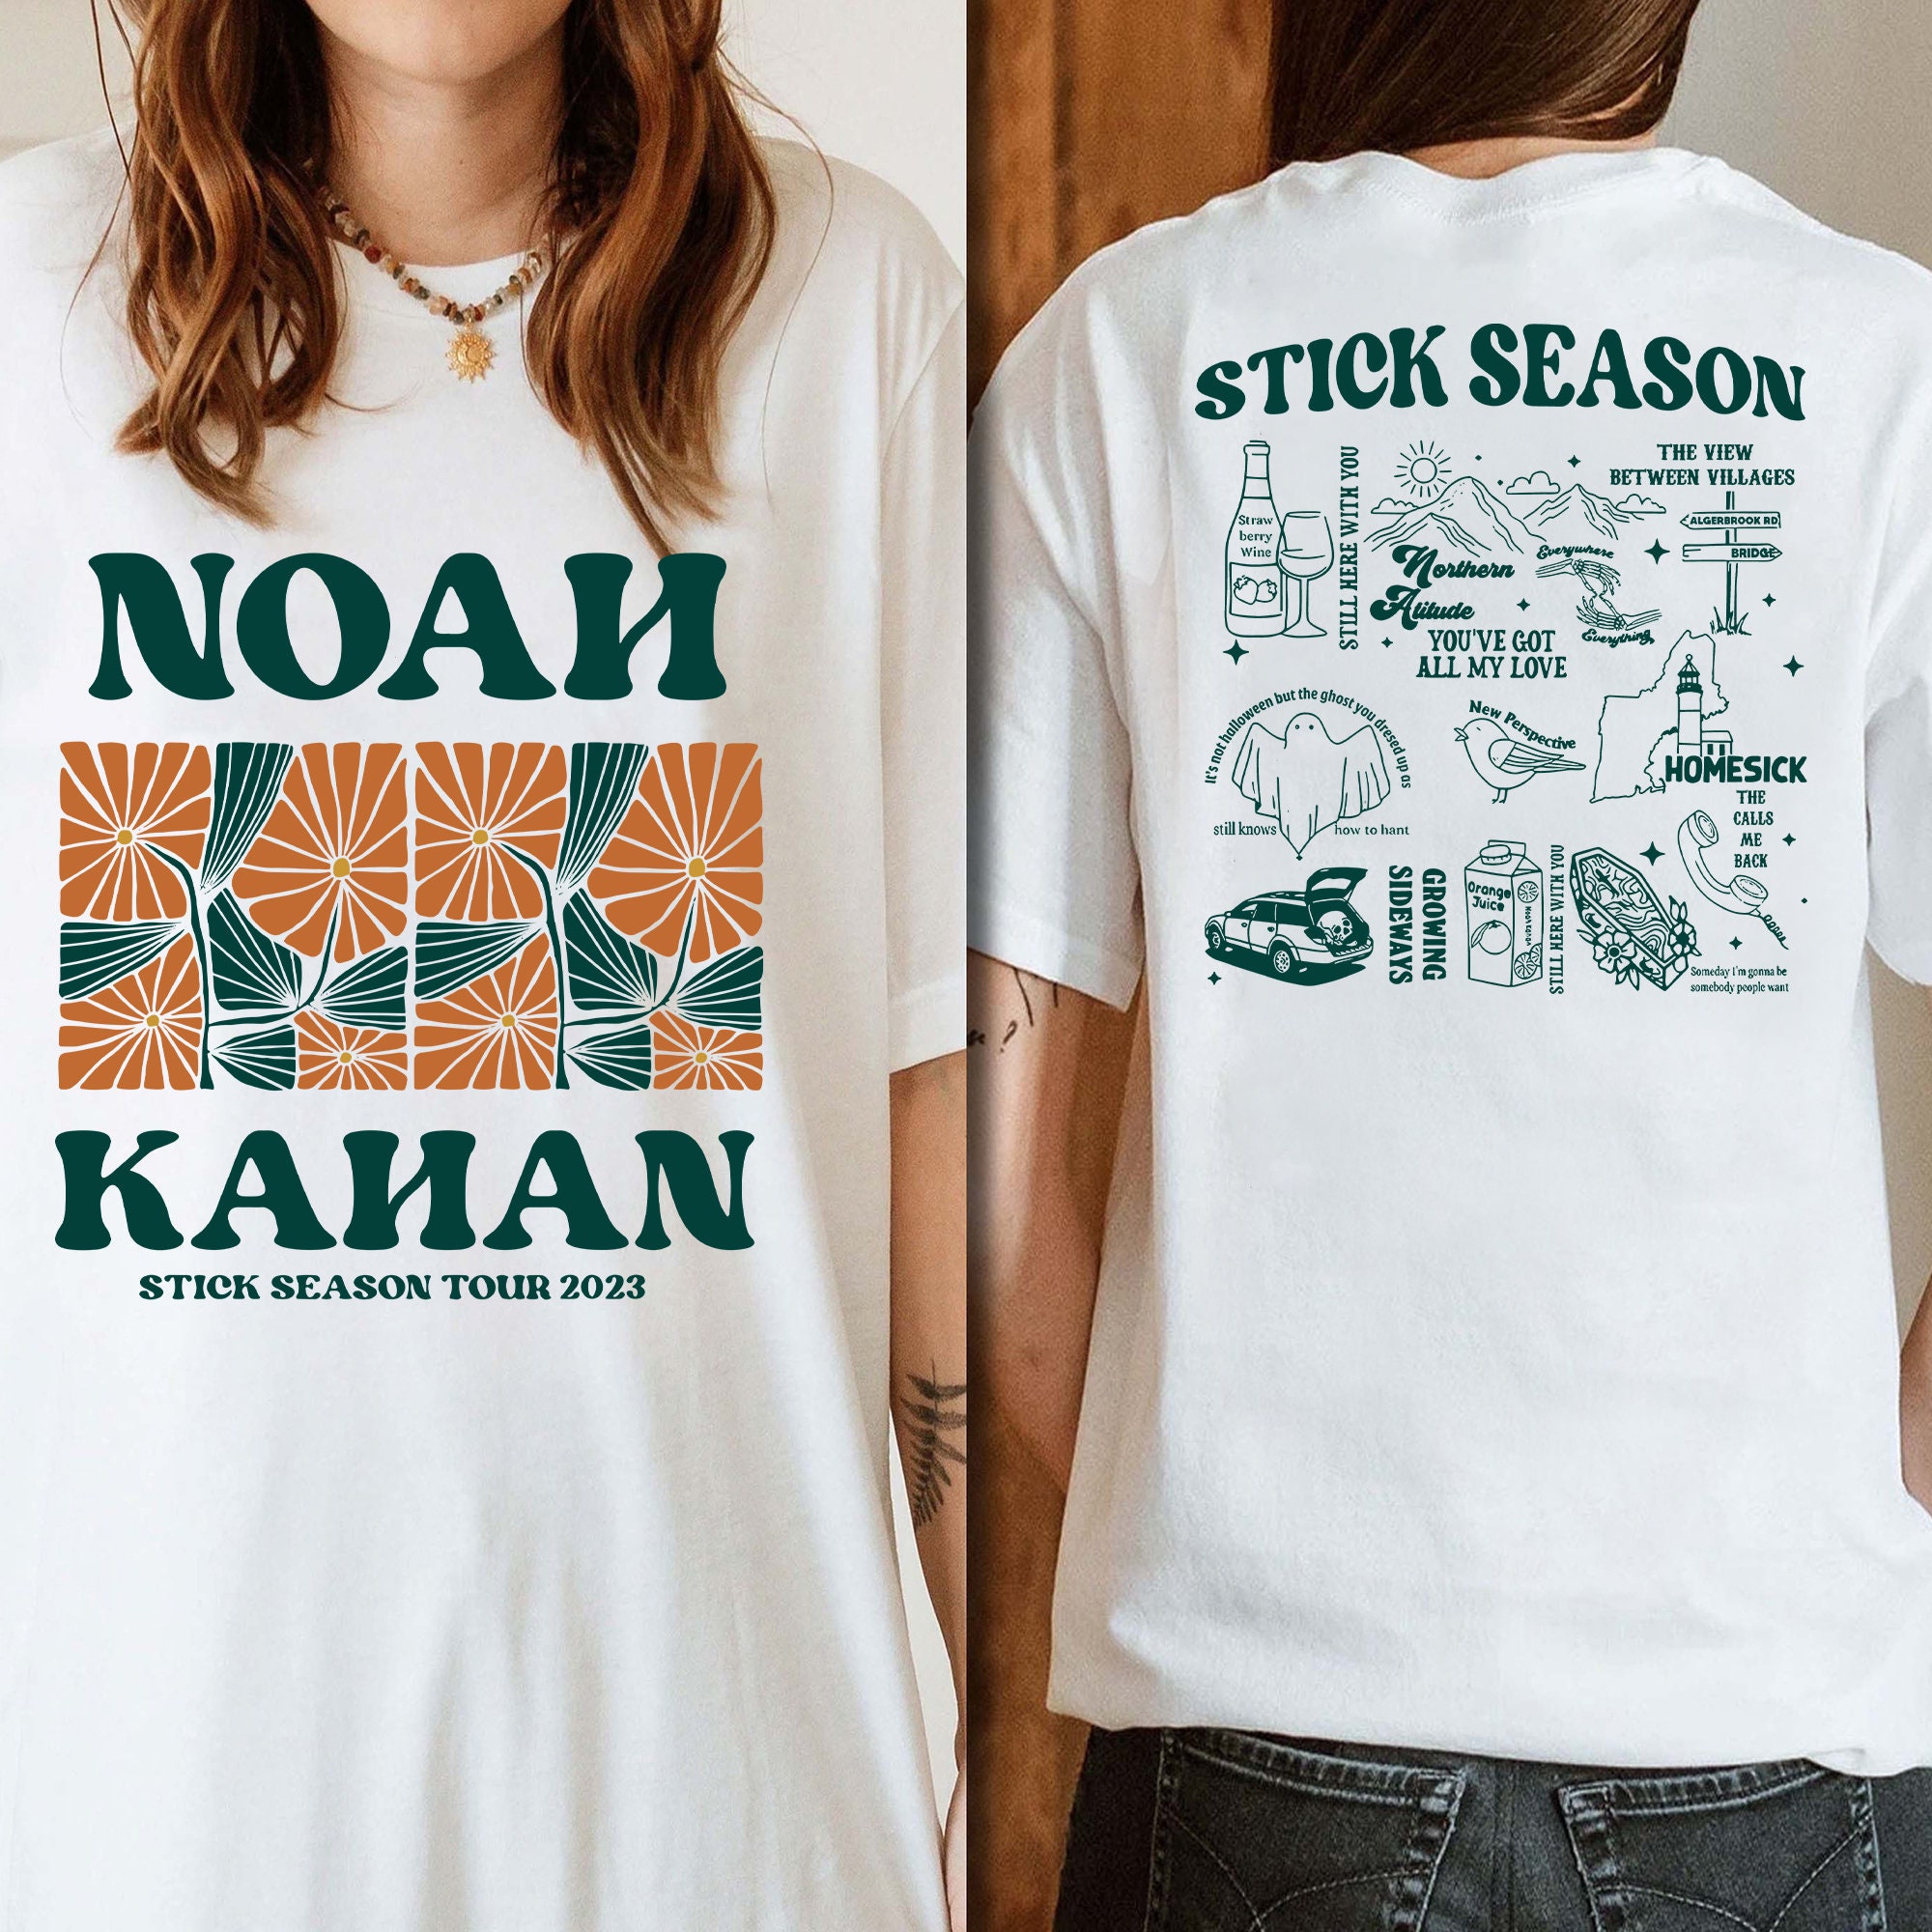 Vintage Stick Season Tour Shirt, Noah Kahan Stick Season Tour Shirt, Kahan Folk Pop Music